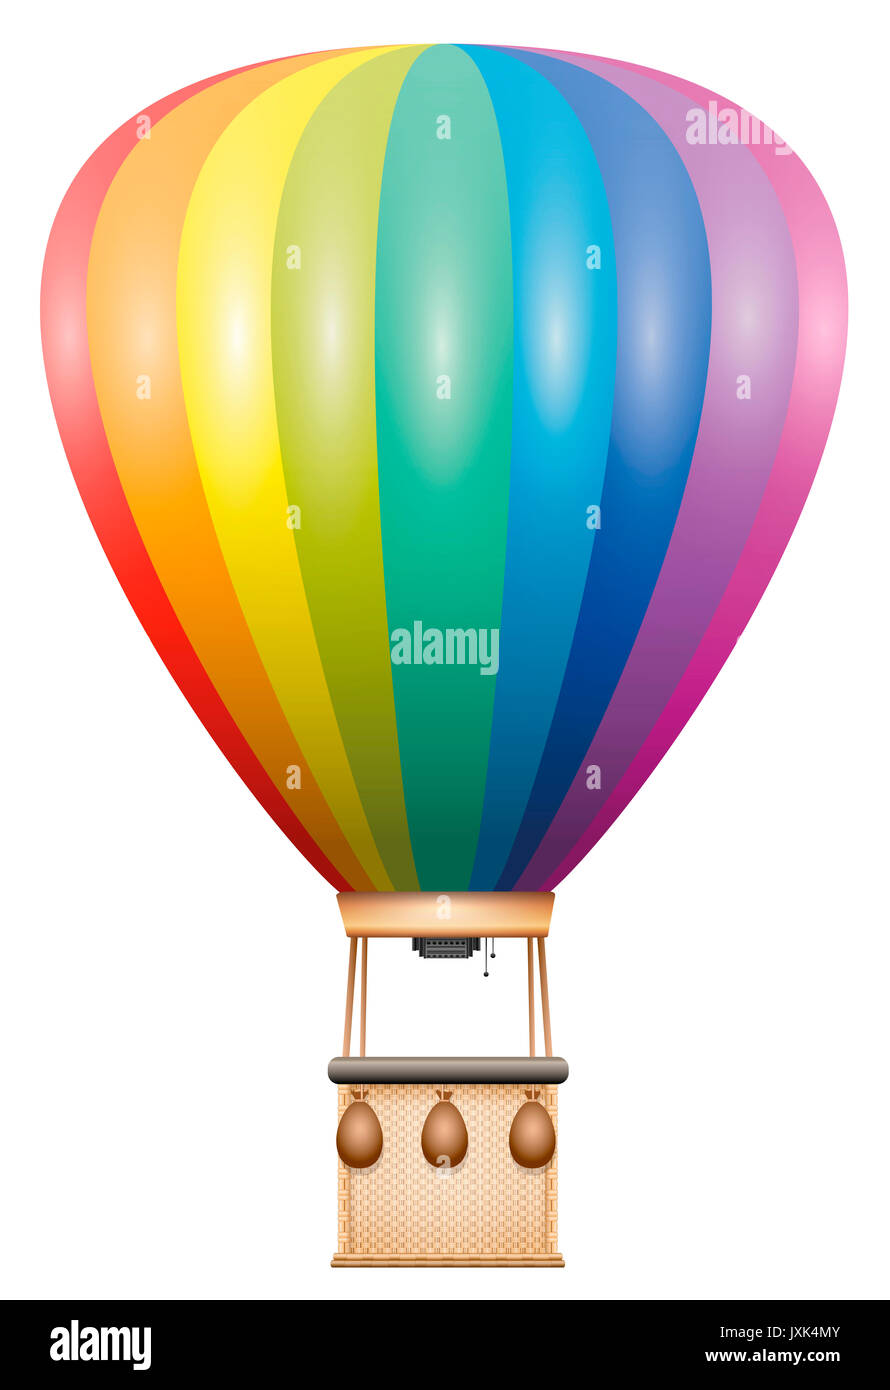 Captive balloon - rainbow colored flying vehicle with basket and sandbags - illustration on white background. Stock Photo